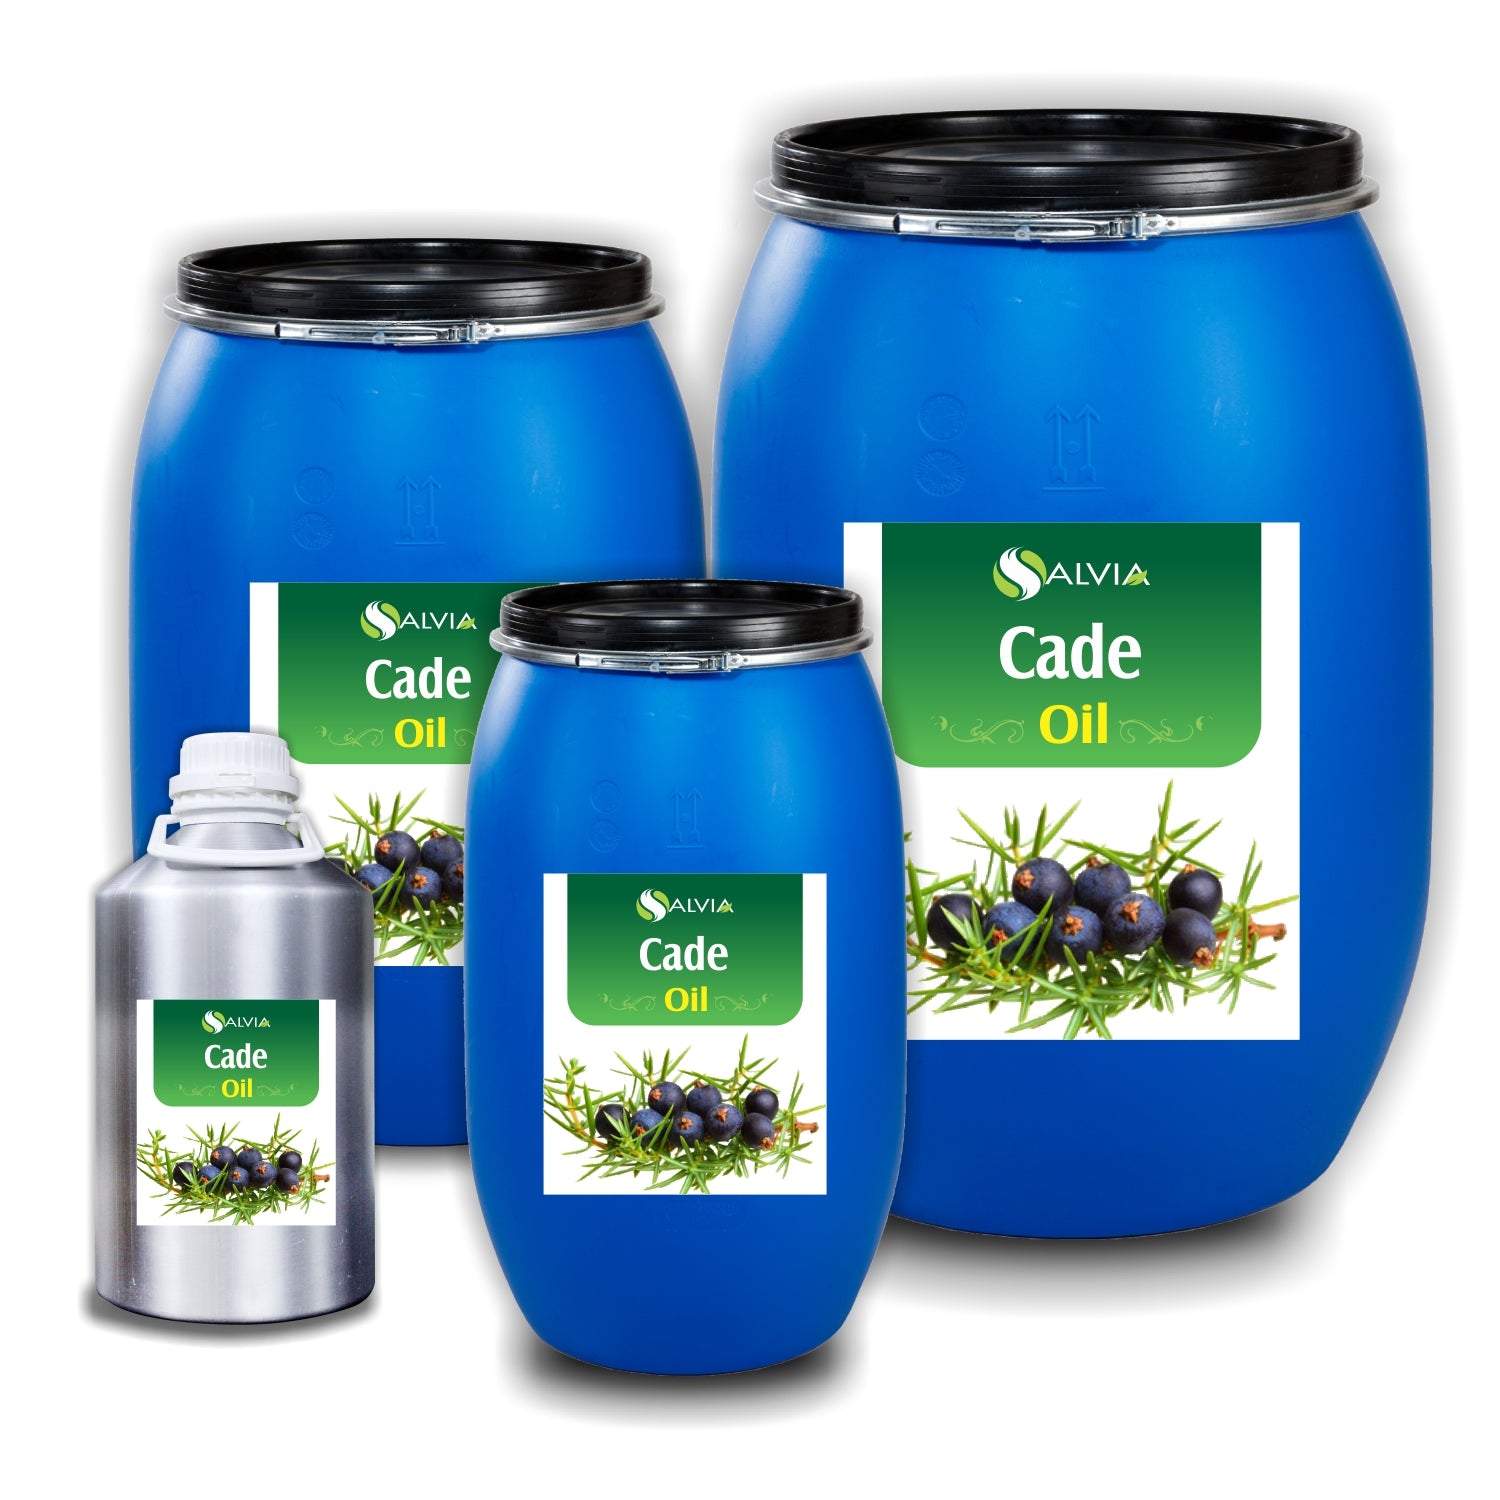 Salvia Natural Essential Oils 2000ml Cade Oil (Juniperus Oxycedrus) 100% Natural Pure Essential Oil